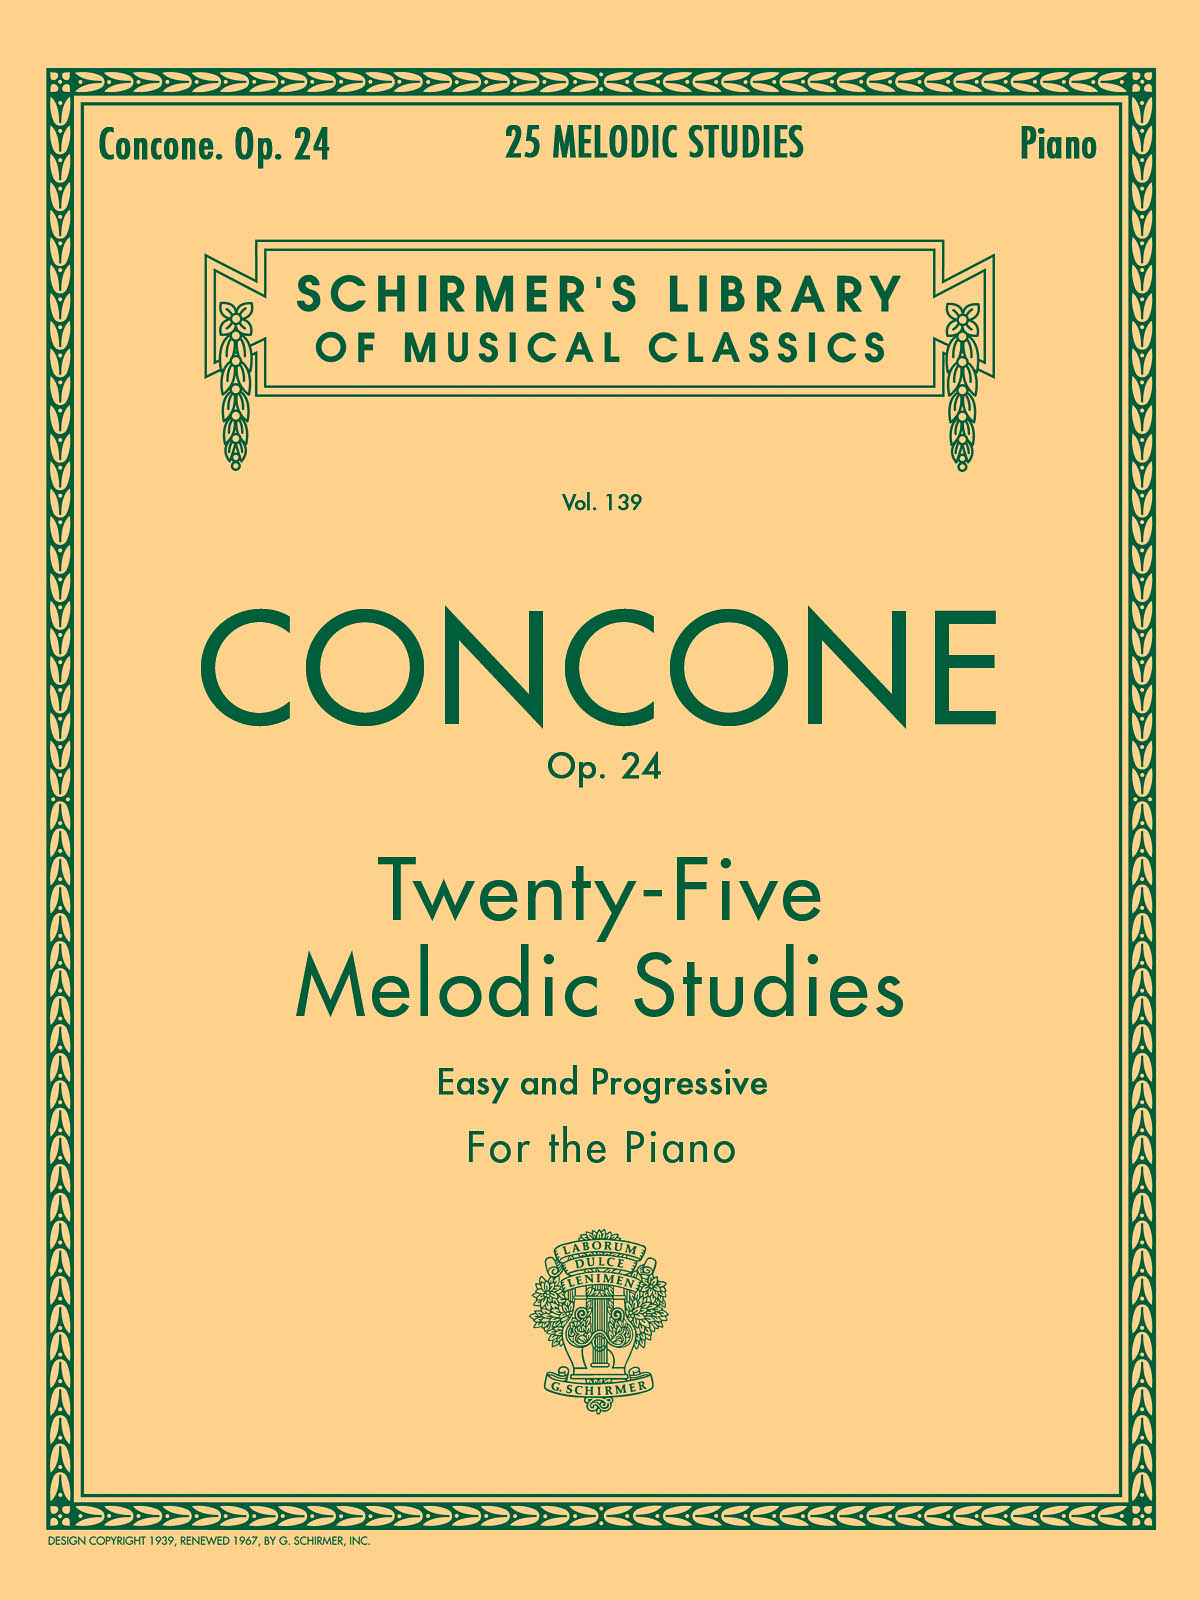 Concone: 25 Melodic Studies, Op. 24